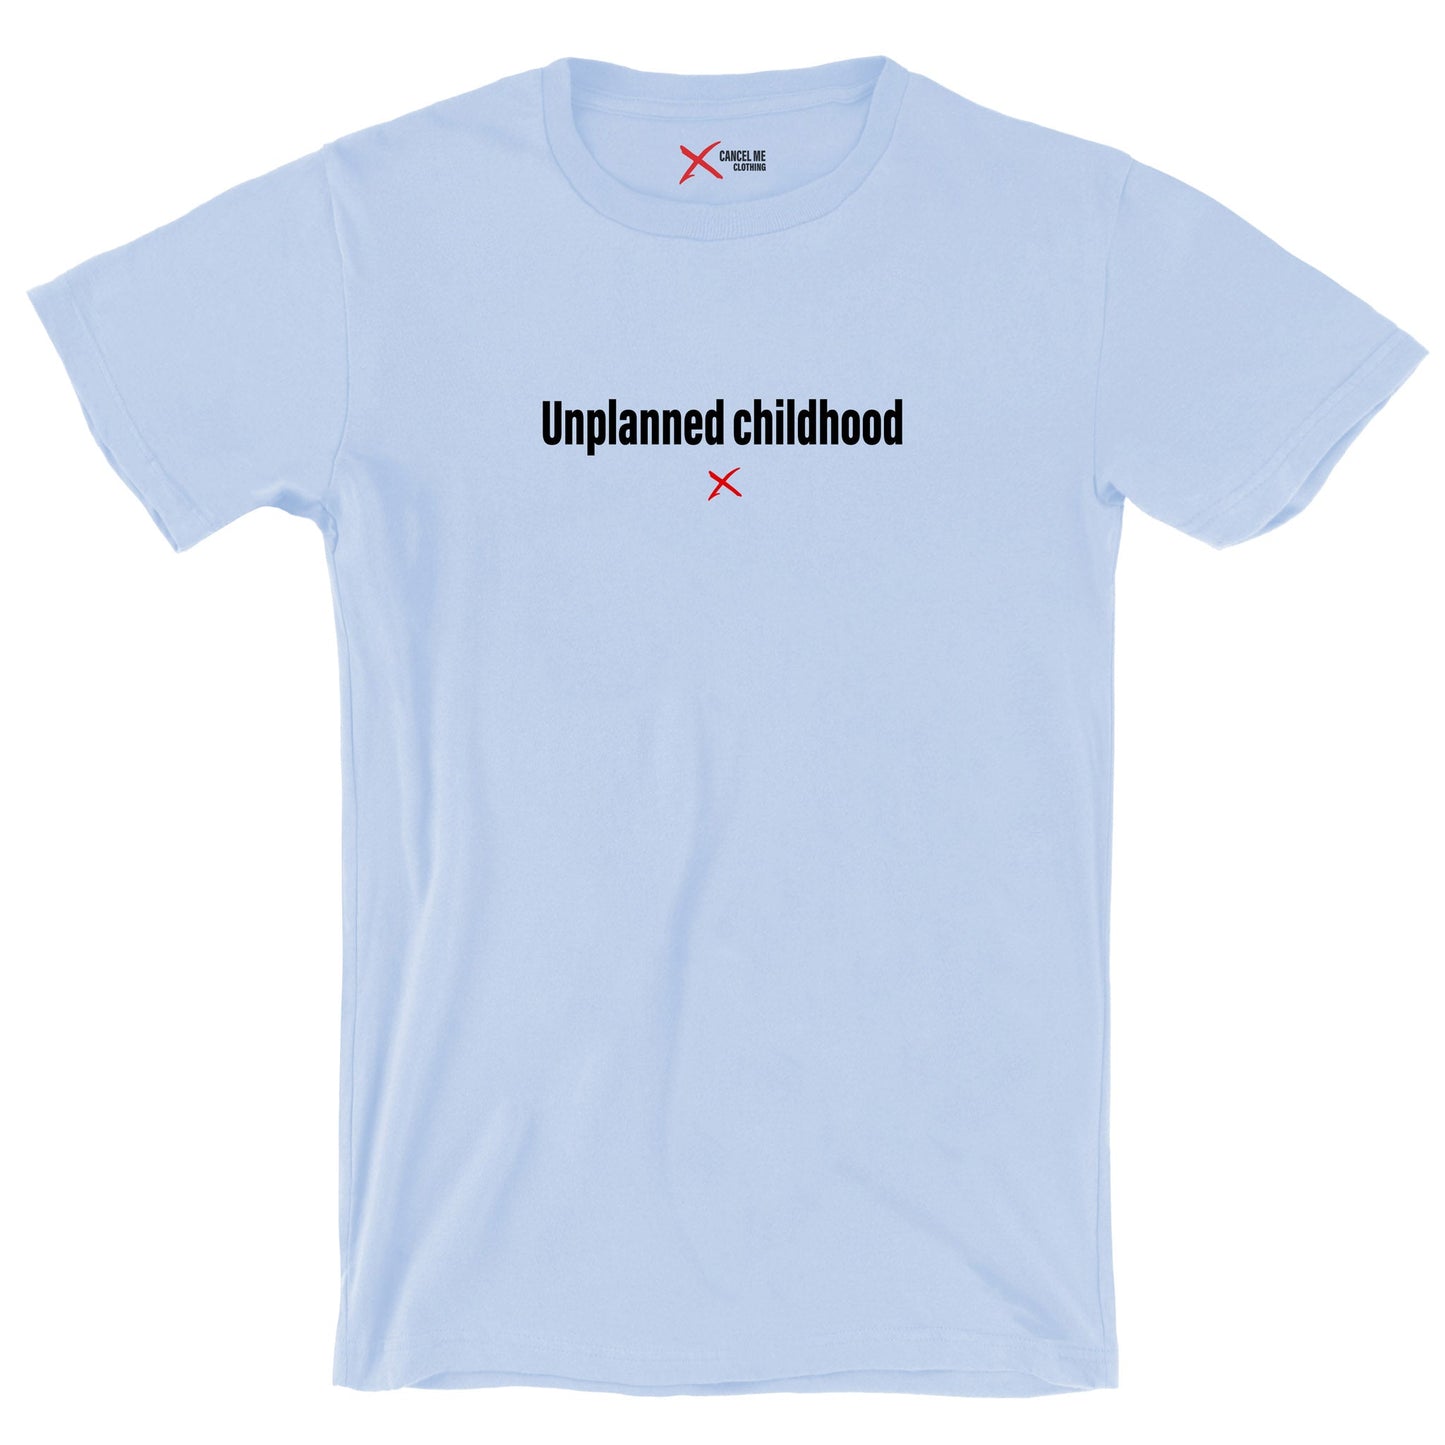 Unplanned childhood - Shirt